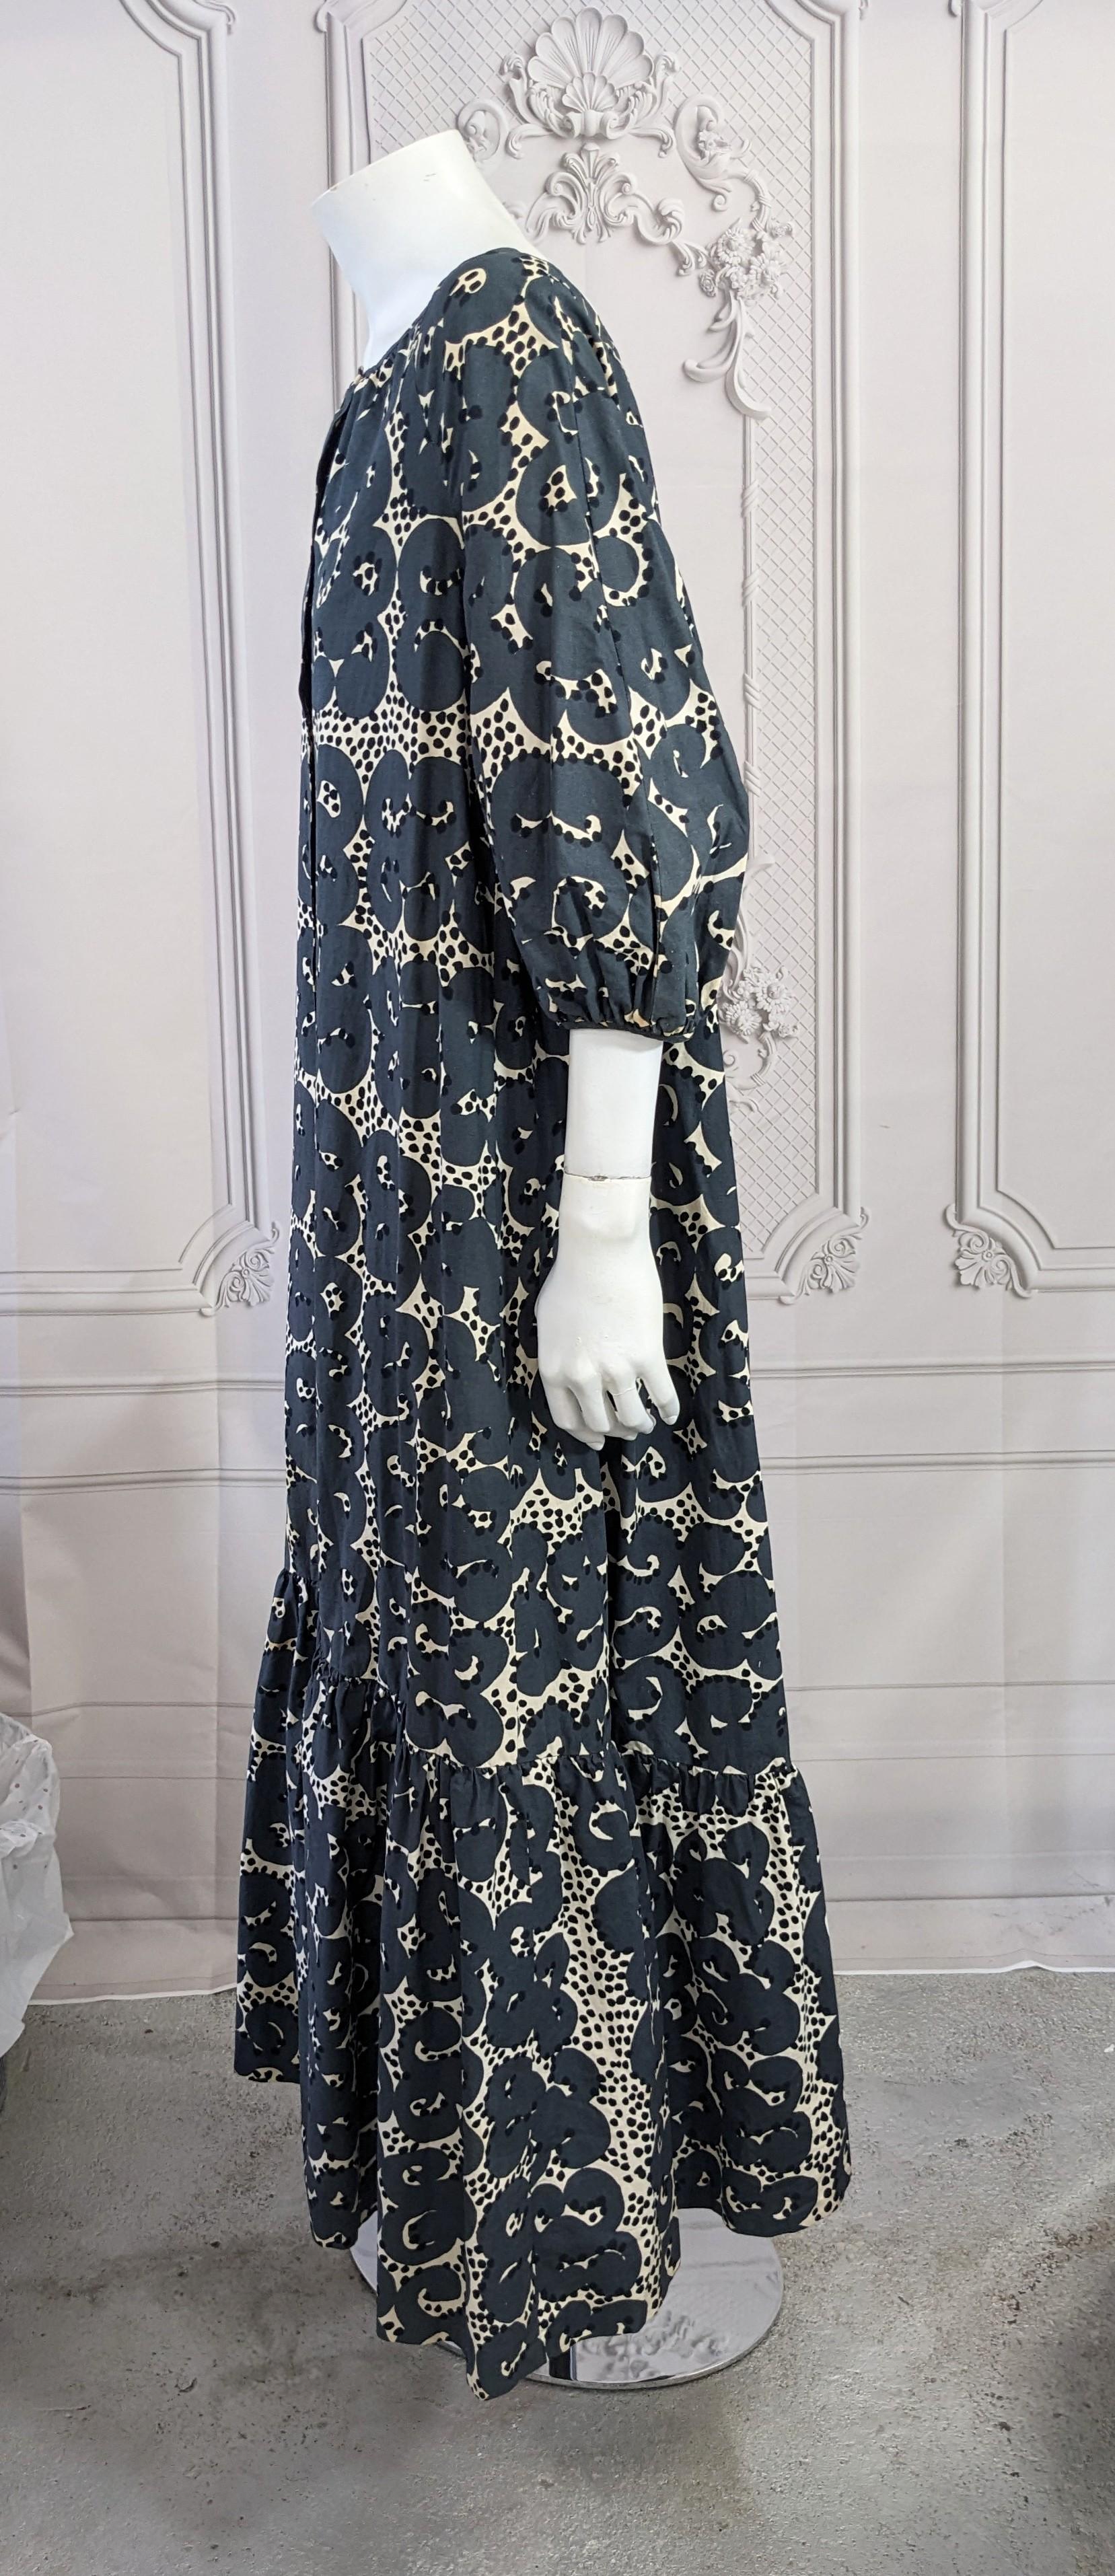 Cotton Poplin Marimekko Maxi Ruffle Dress In Good Condition For Sale In New York, NY